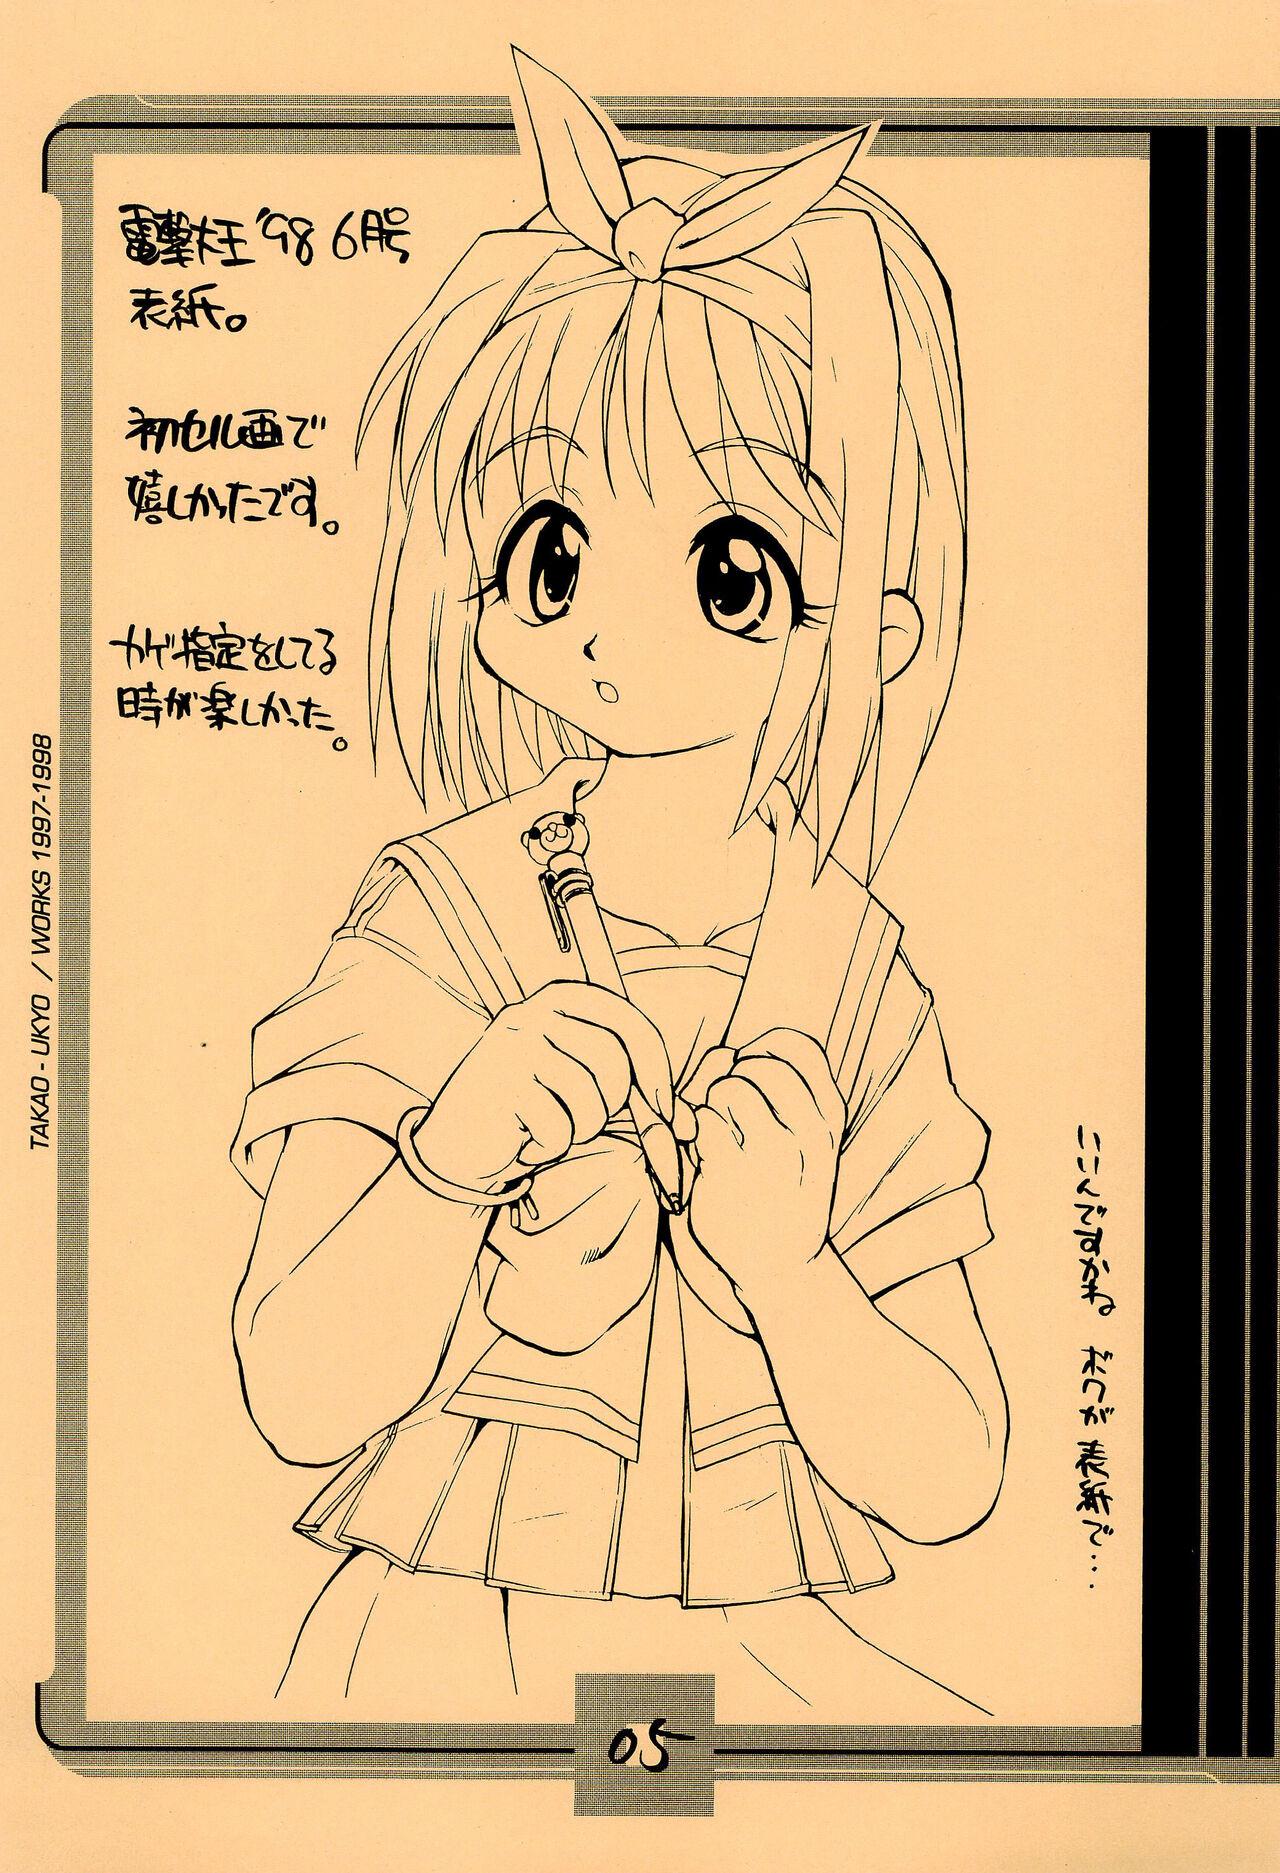 Fudendo Mamagult Katsudou Houkokusho Hikae 1997/11-1998/08 - To heart Fun fun pharmacy 10 carat torte Slim - Page 5